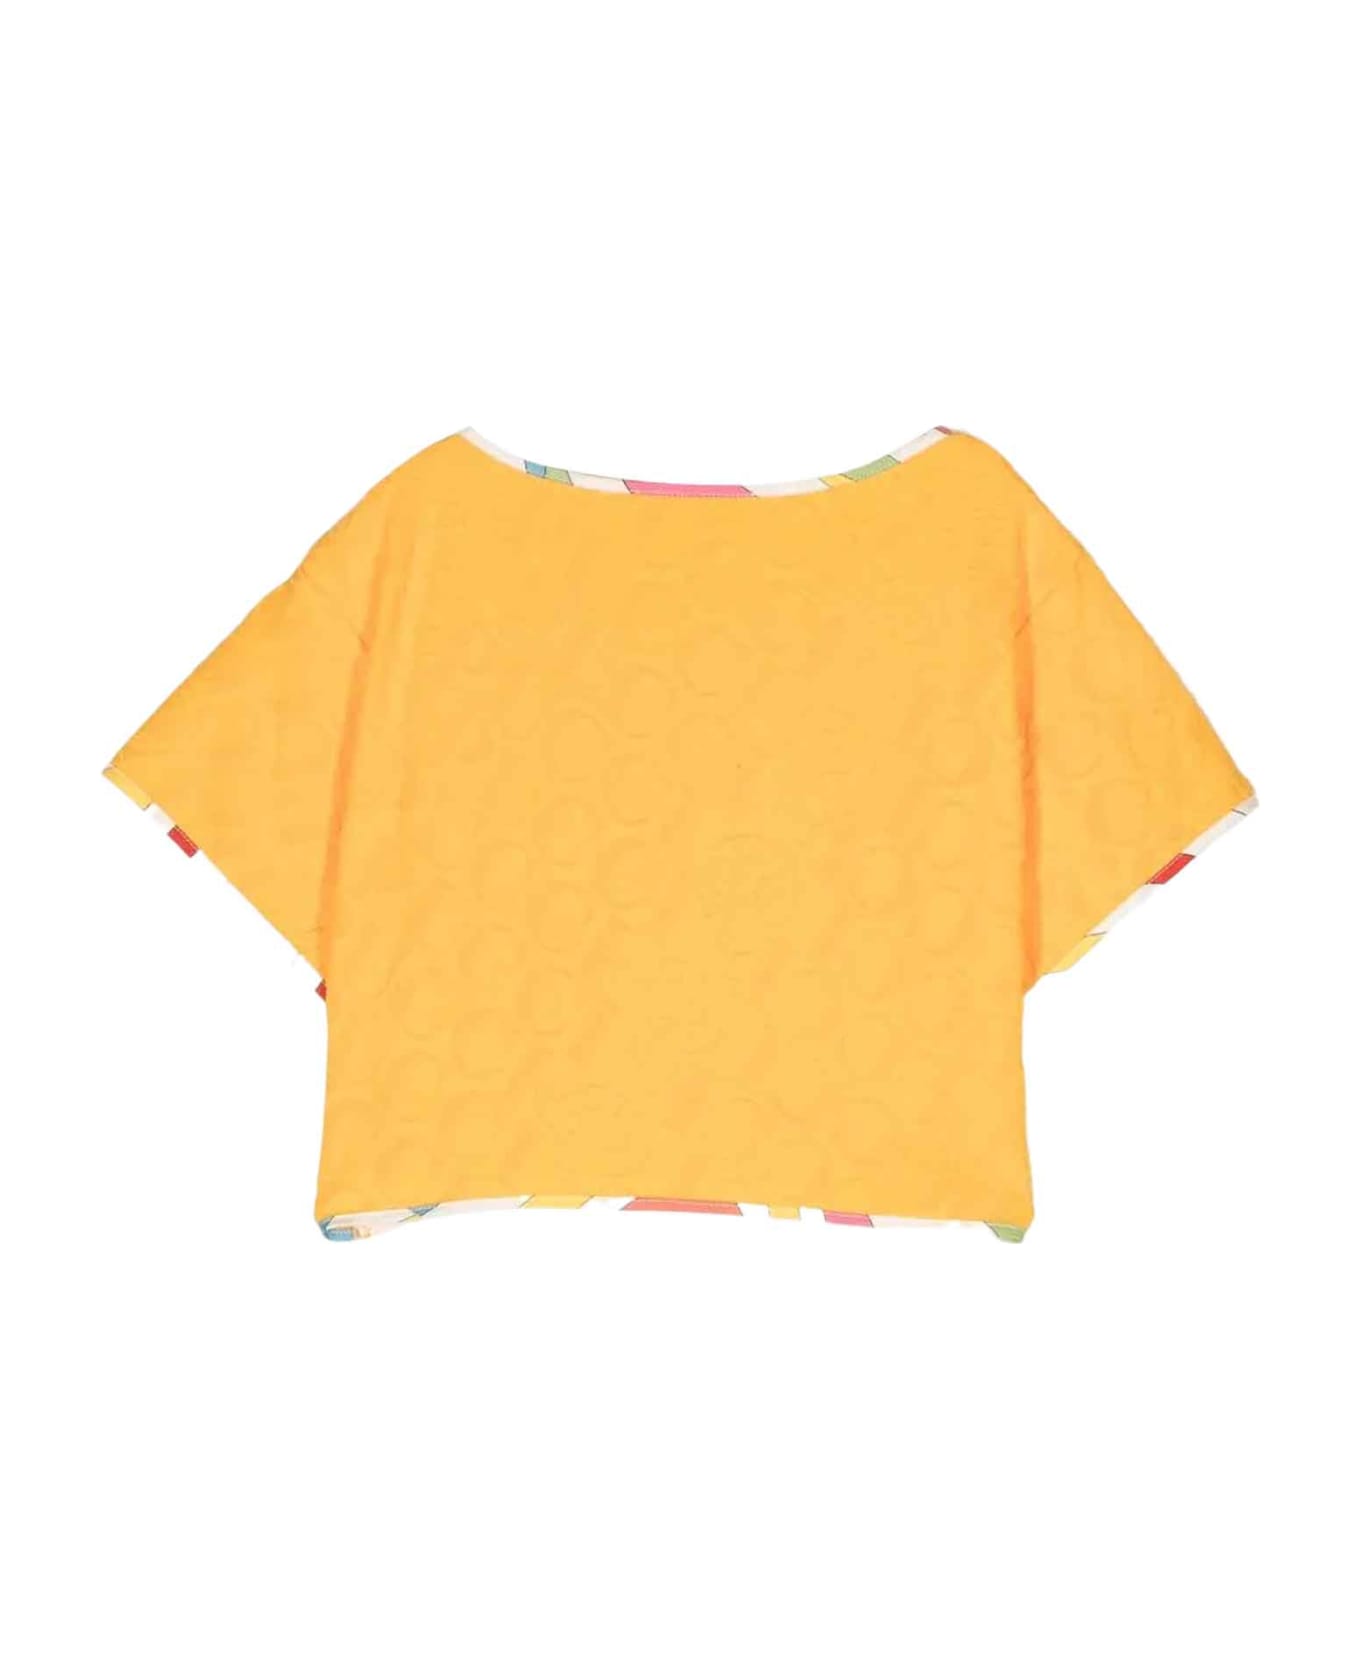 Pucci Yellow T-shirt Girl - Giallo